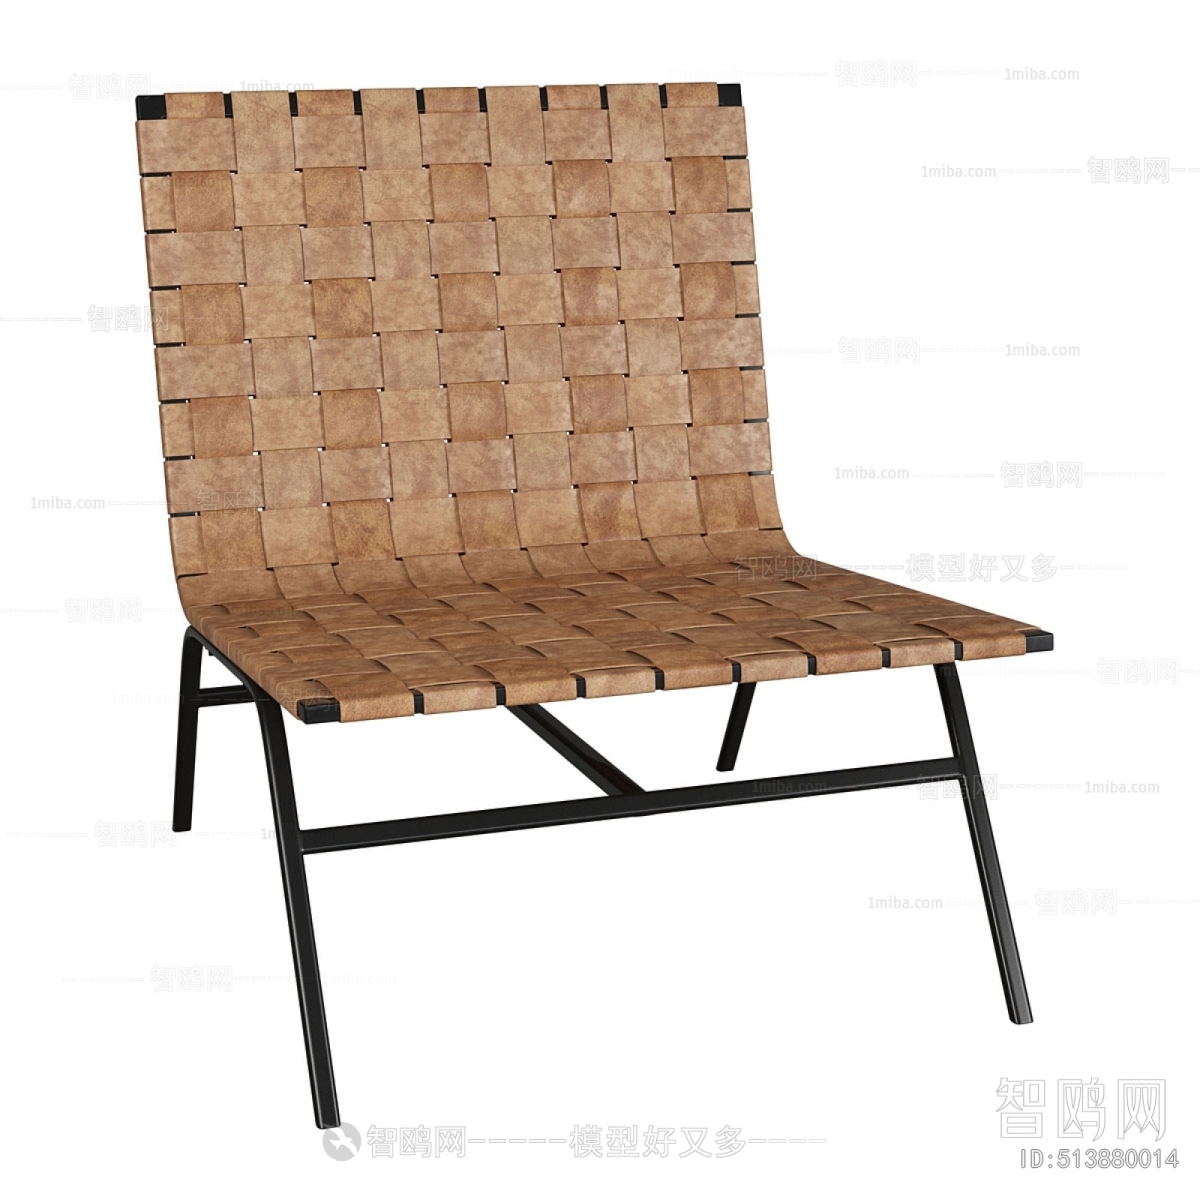 Wabi-sabi Style Outdoor Chair